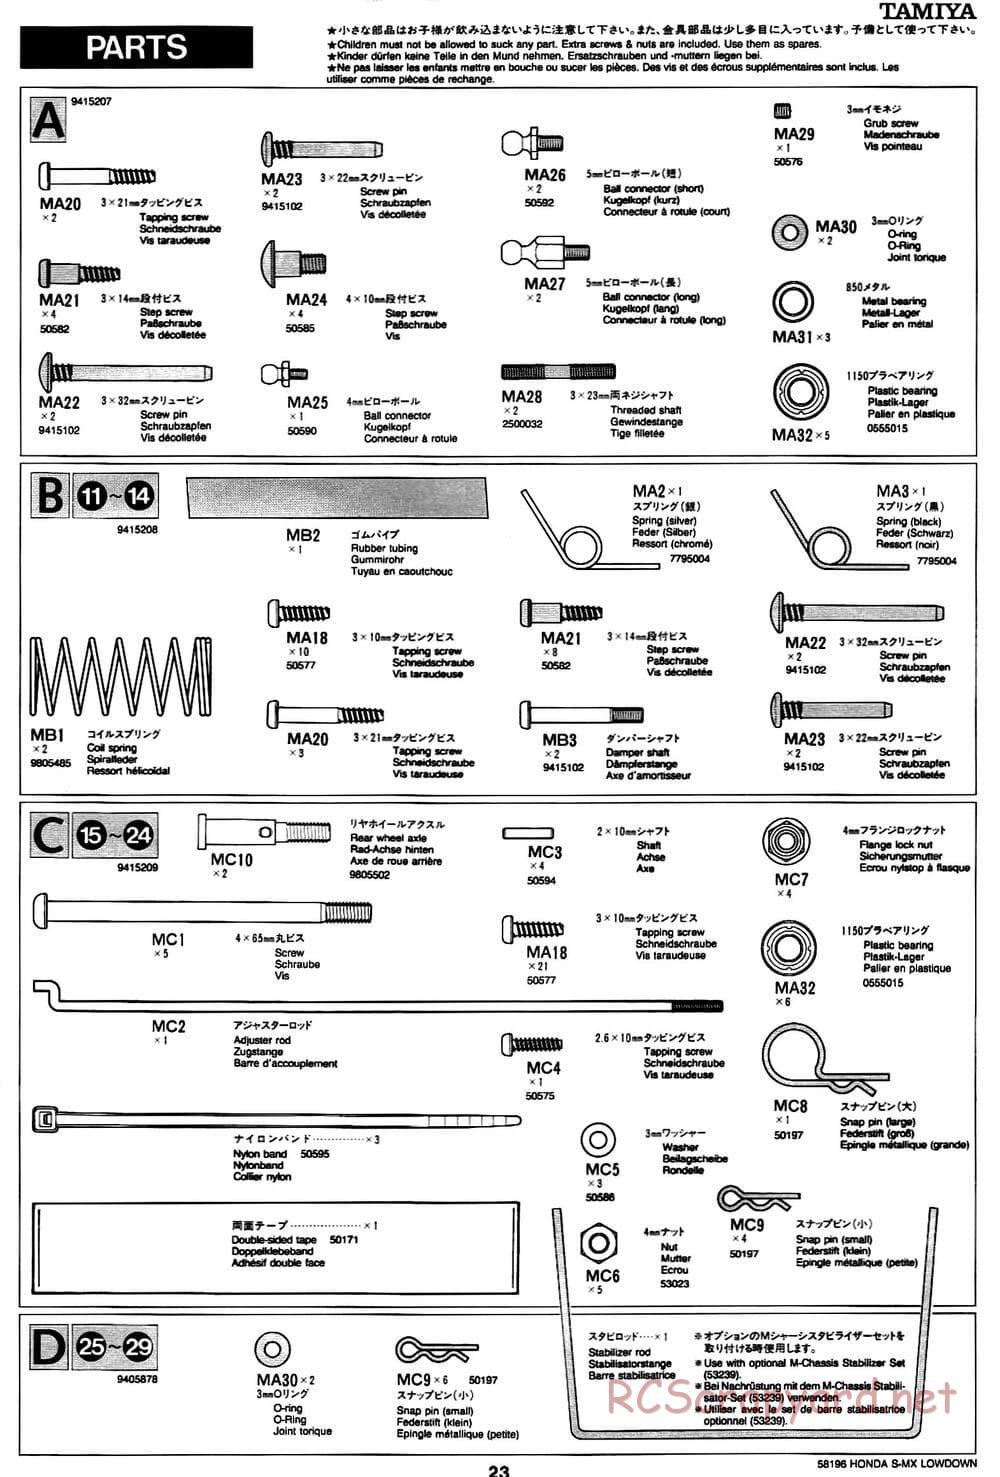 Tamiya - Honda S-MX Lowdown - M01 Chassis - Manual - Page 23